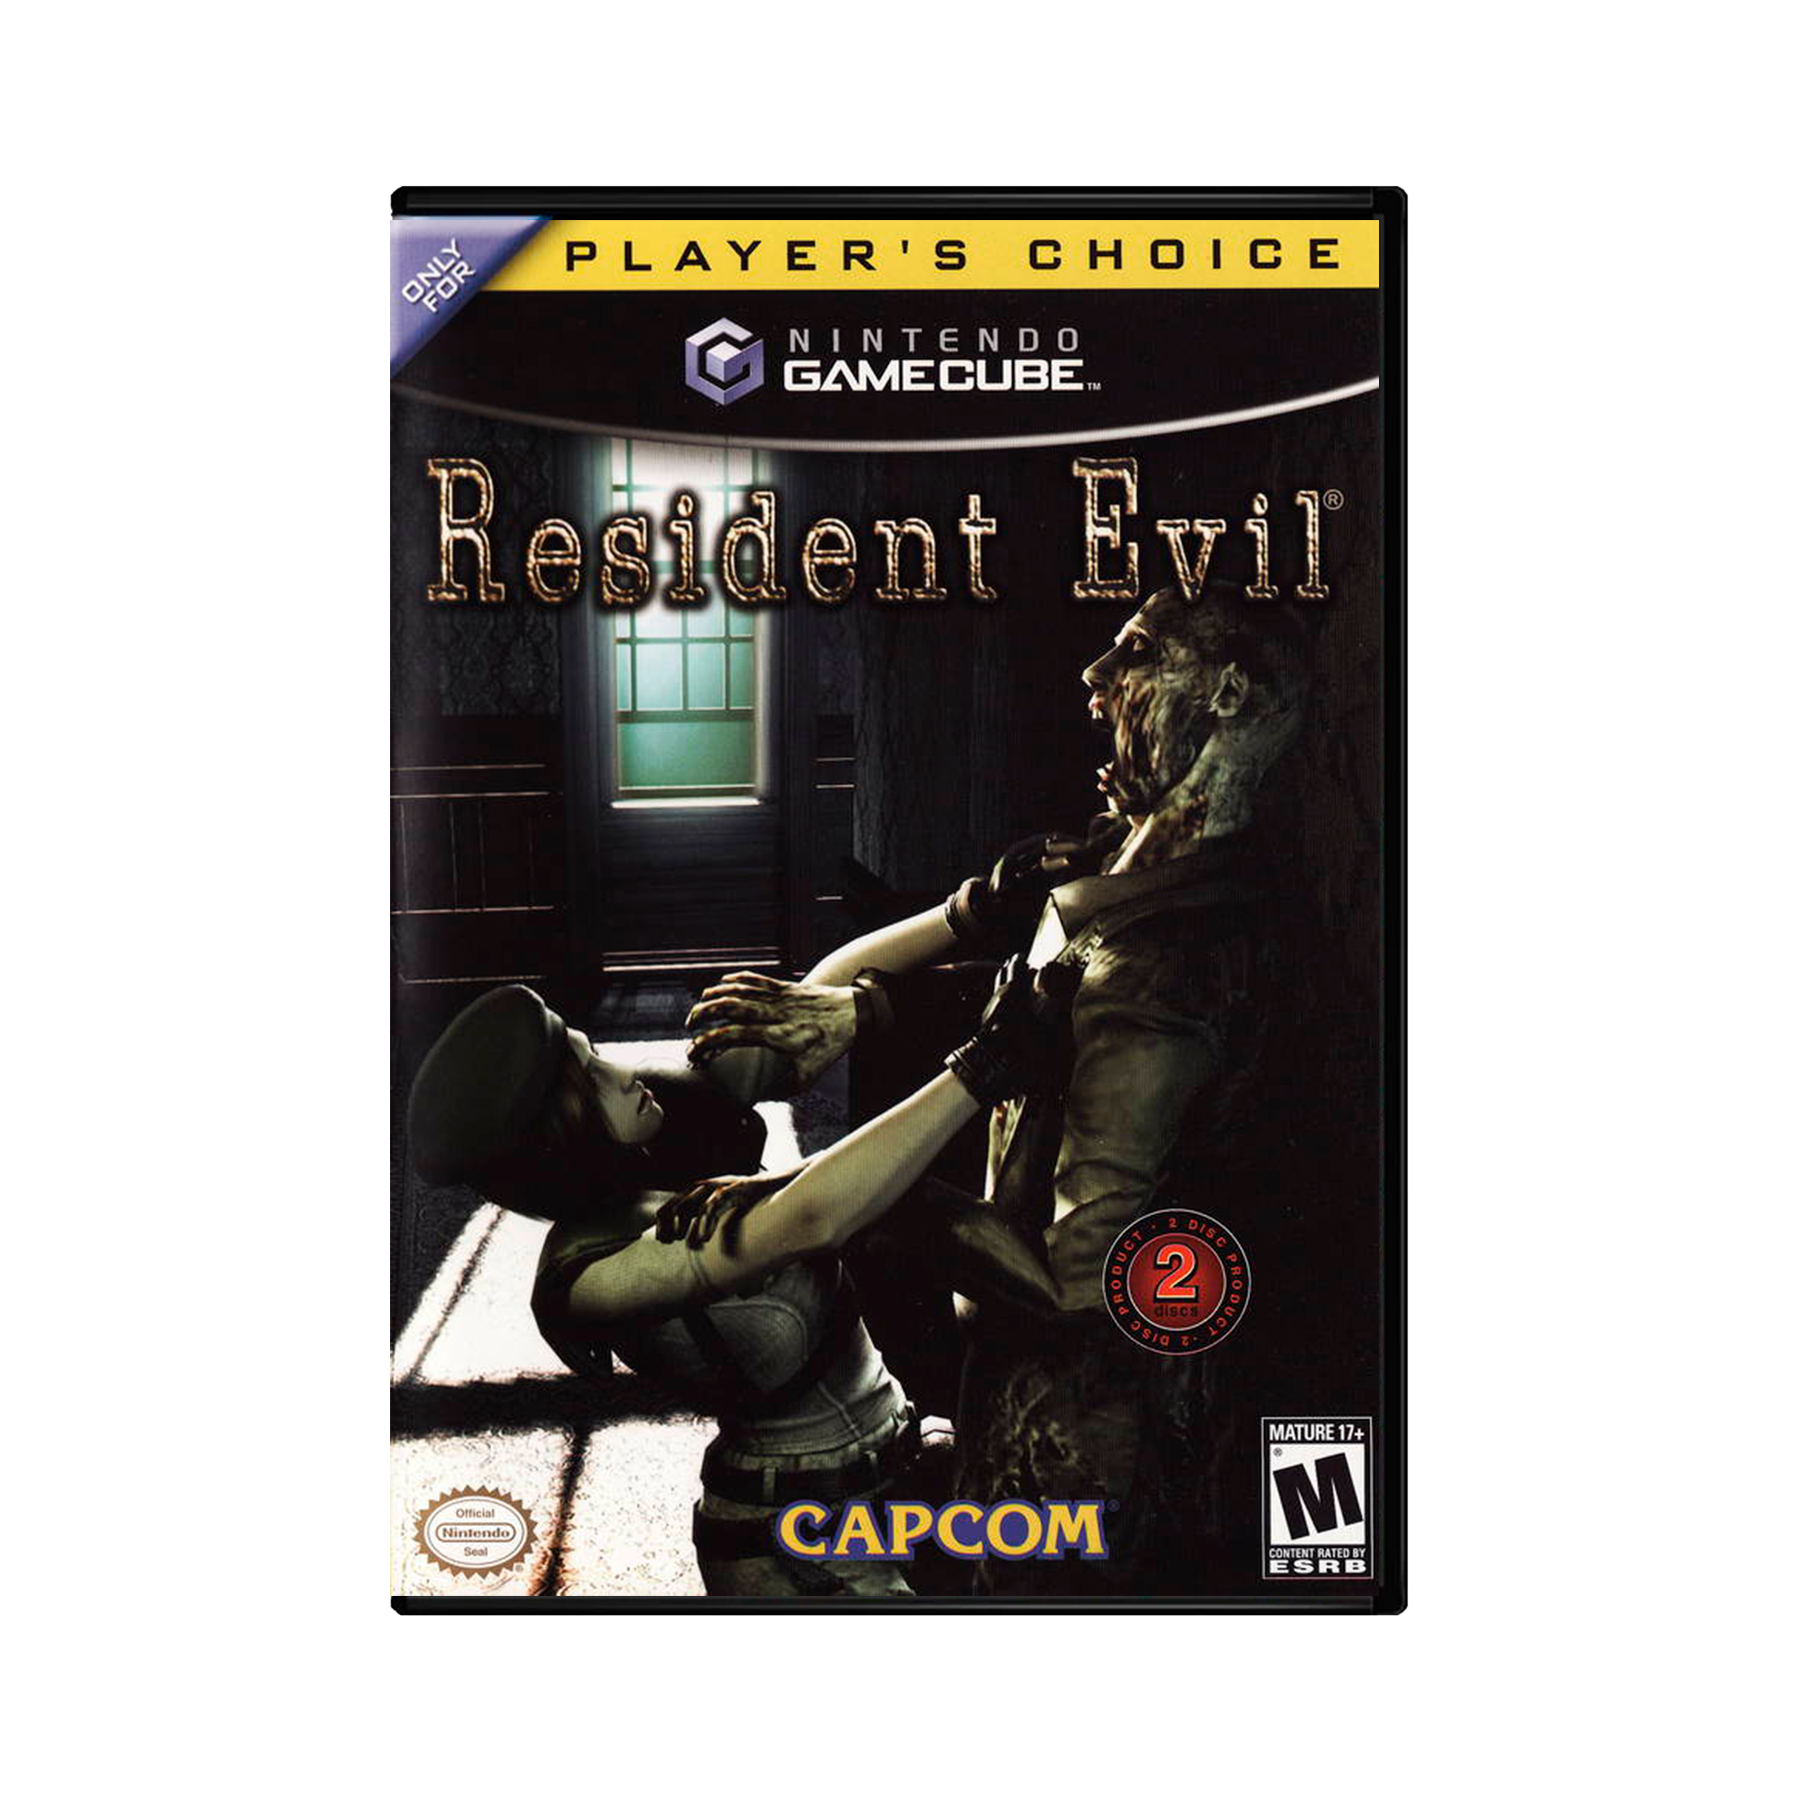 Jogo Resident Evil 5 - PS3 - MeuGameUsado